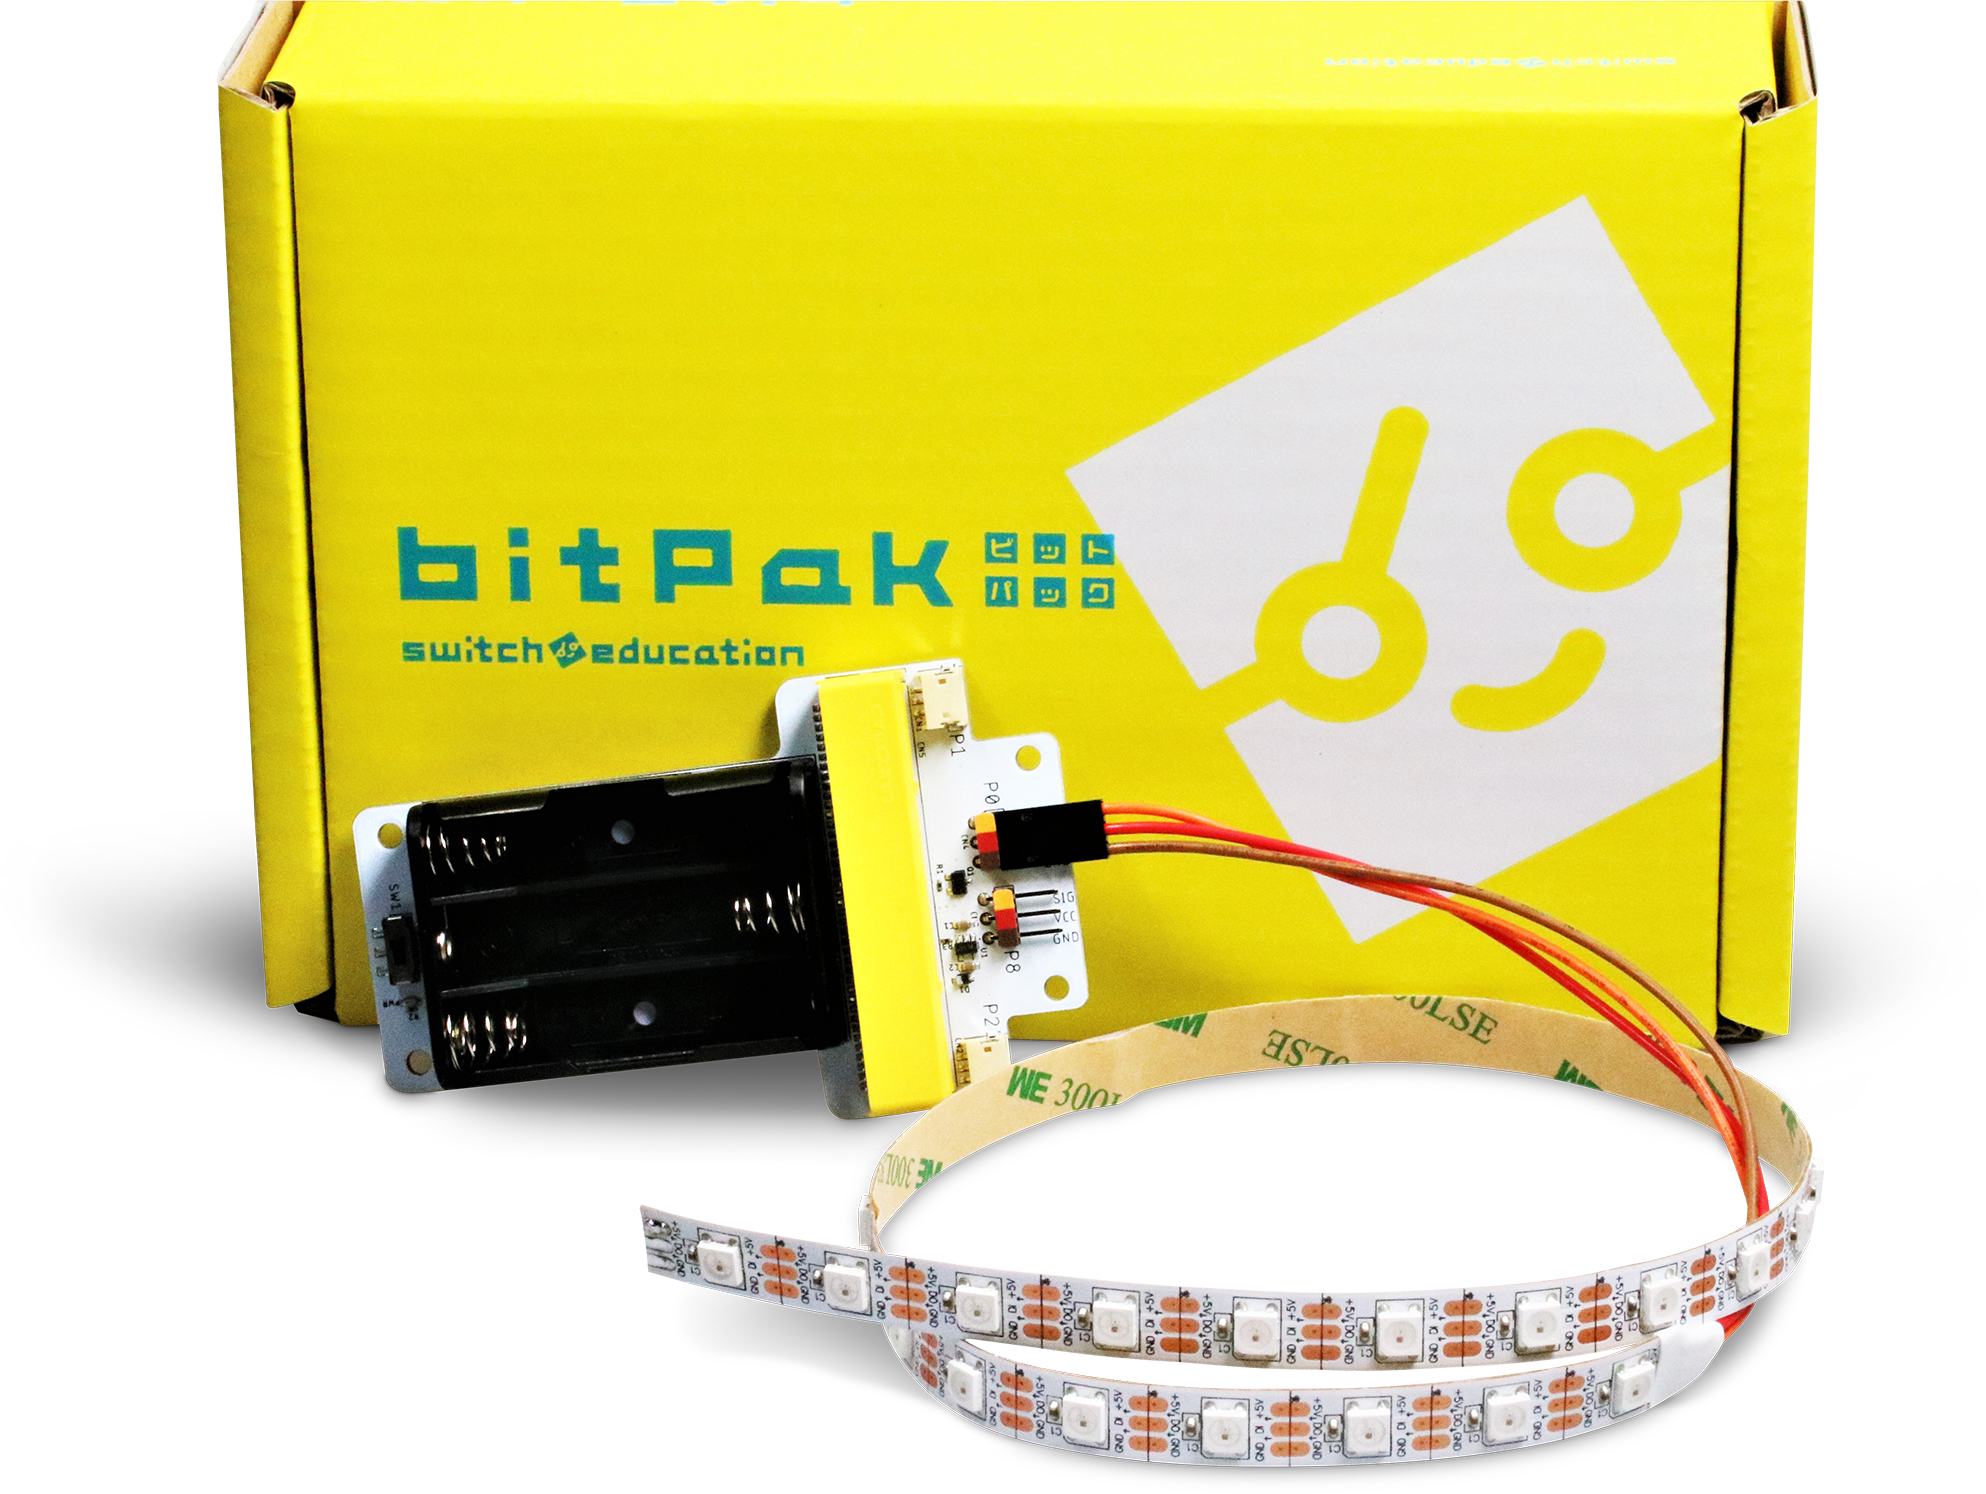 Microbits bitPak: Light